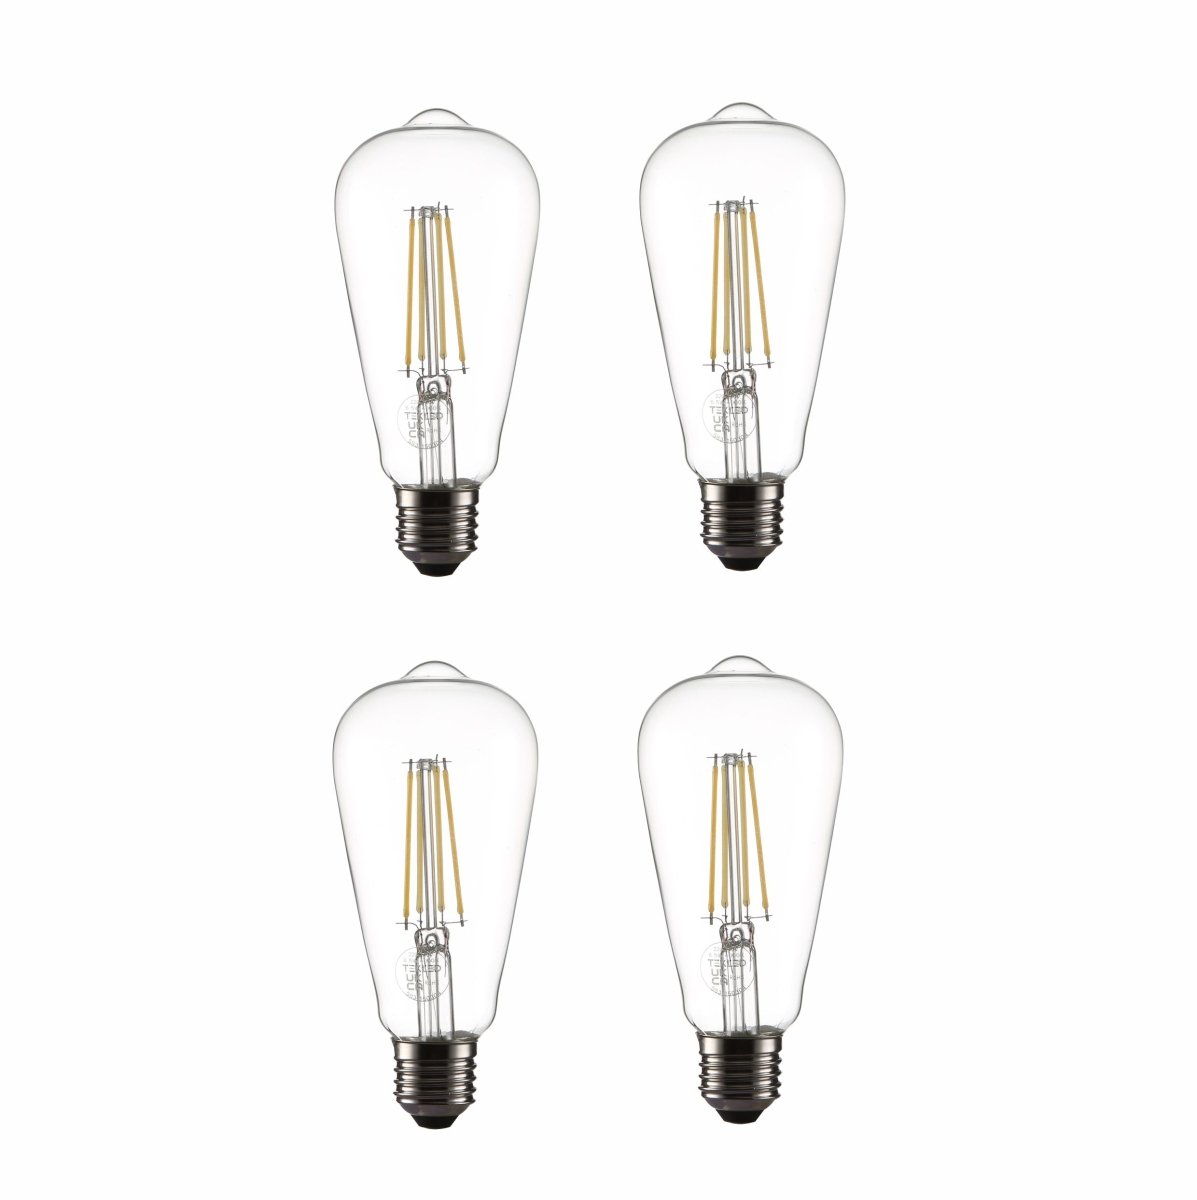 Main image of LED Filament Bulb ST64 Edison E27 Edison Screw 6.5W 806lm Cool White 4000K Clear Pack of 4 | TEKLED 583-150304